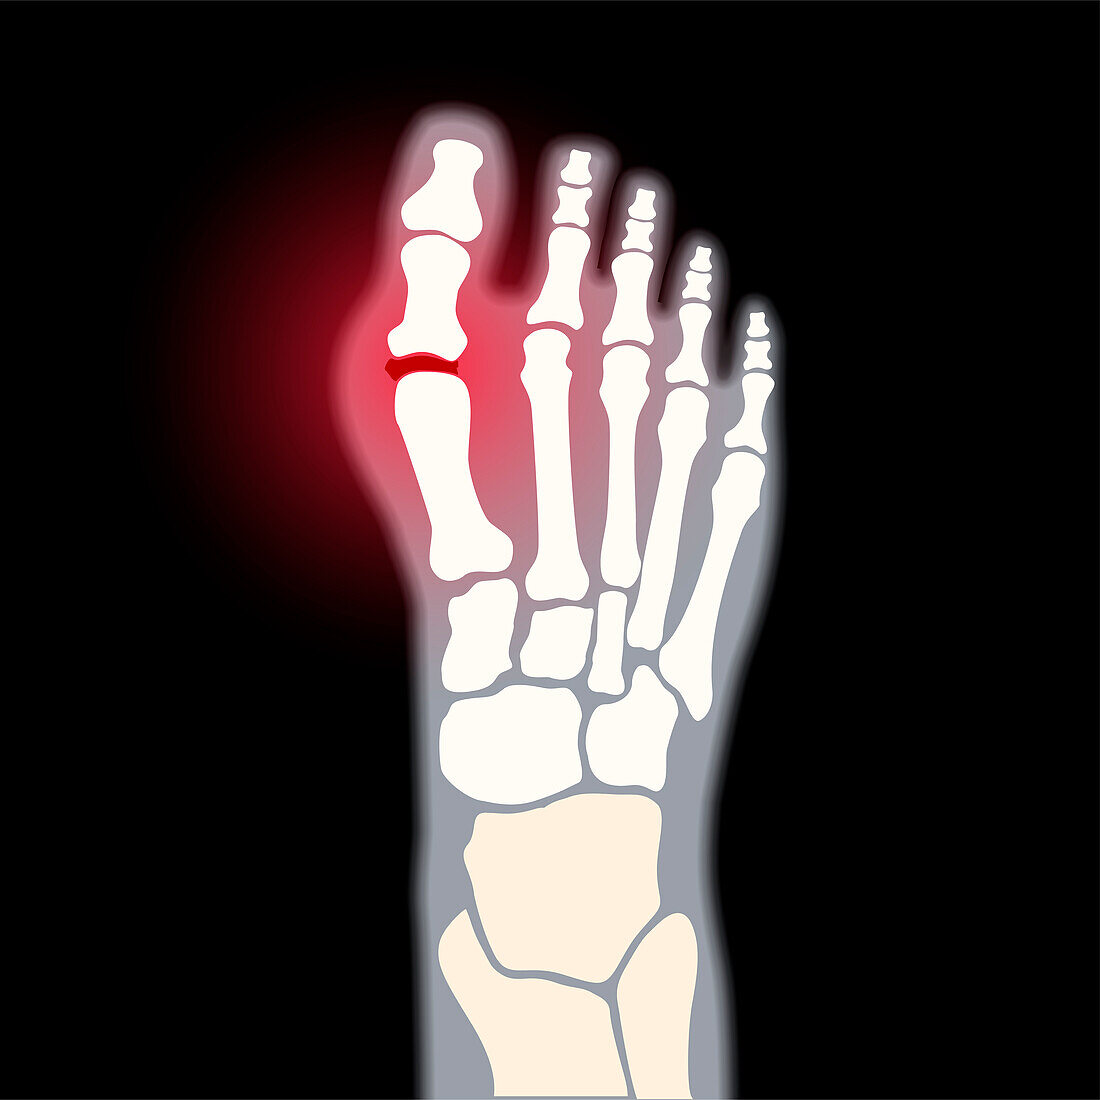 Arthritis of the foot, conceptual illustration